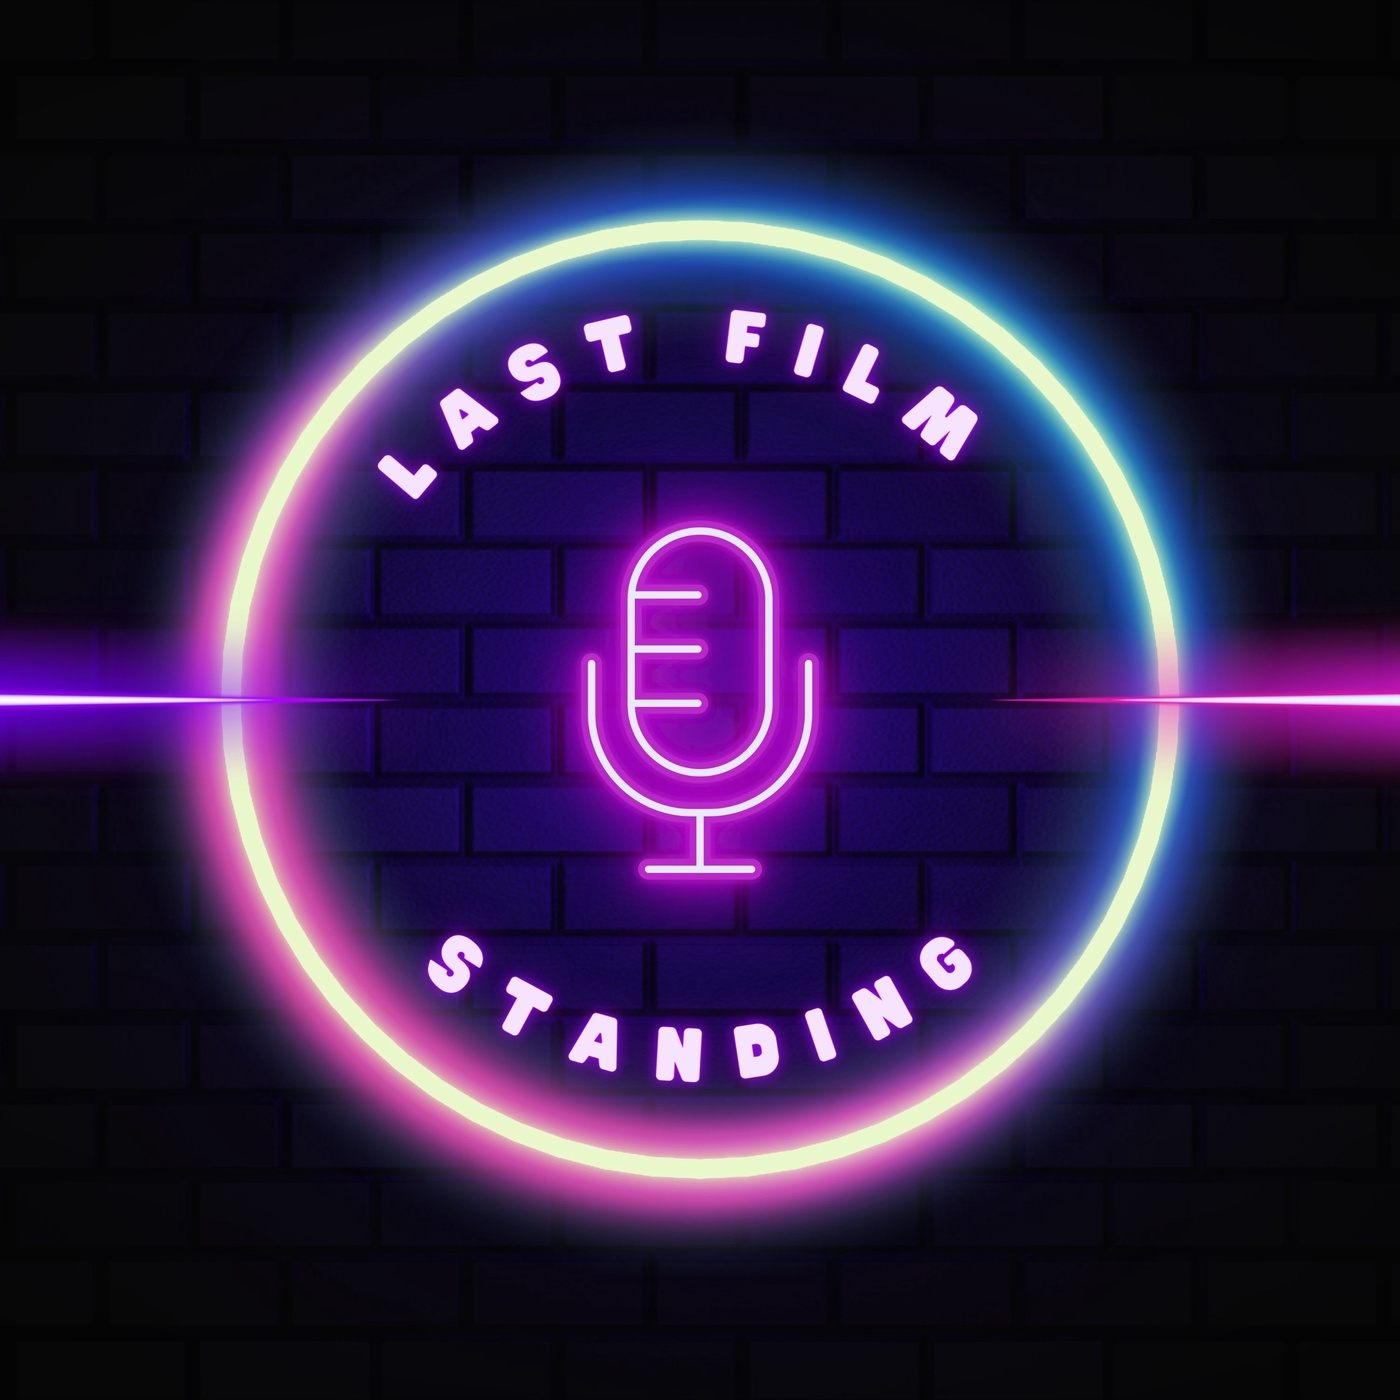 Last Film Standing